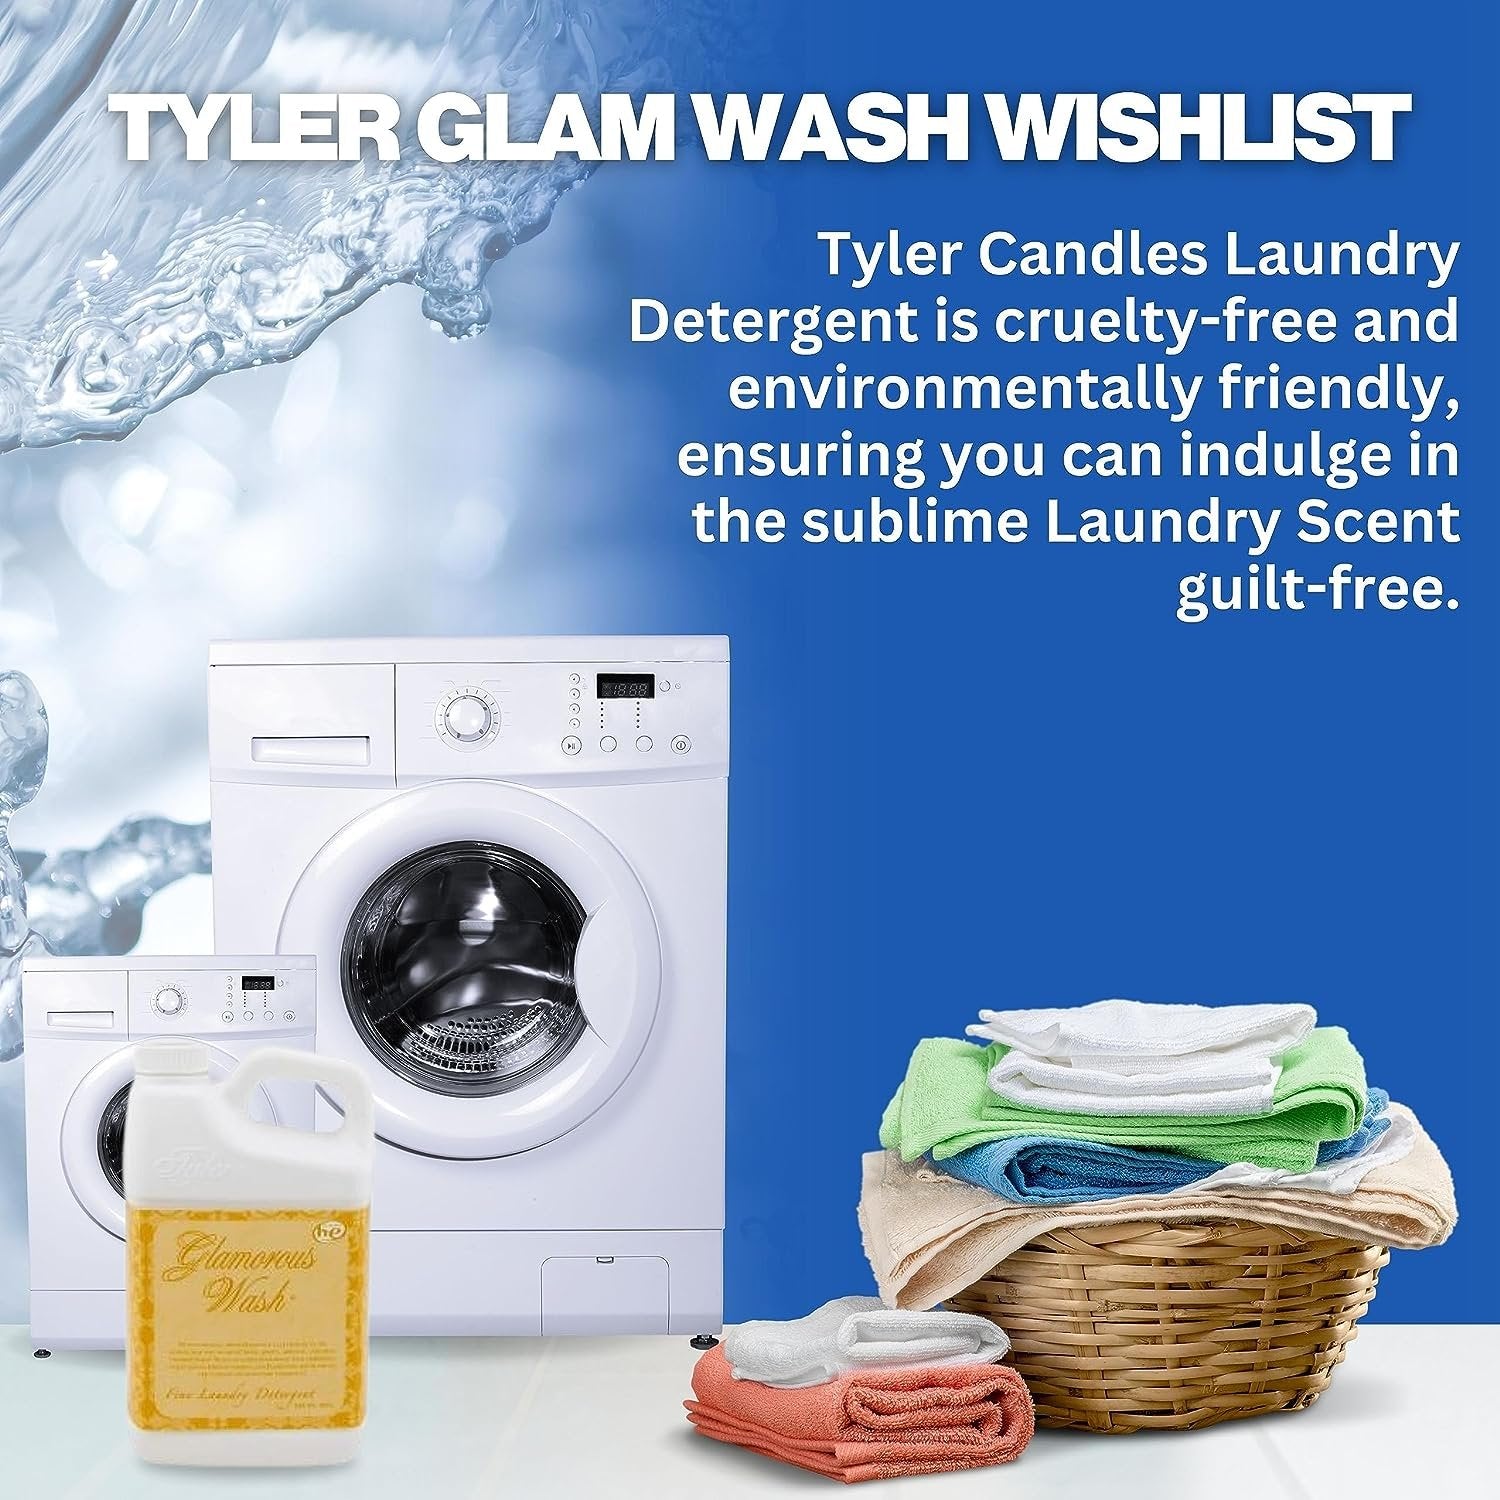 Tyler Glamorous Wash Wishlist Scent Fine Laundry Liquid Detergent - Hand and Machine Washable - 907g (32 Fl Oz) Container and Multi-Purpose Key Chain